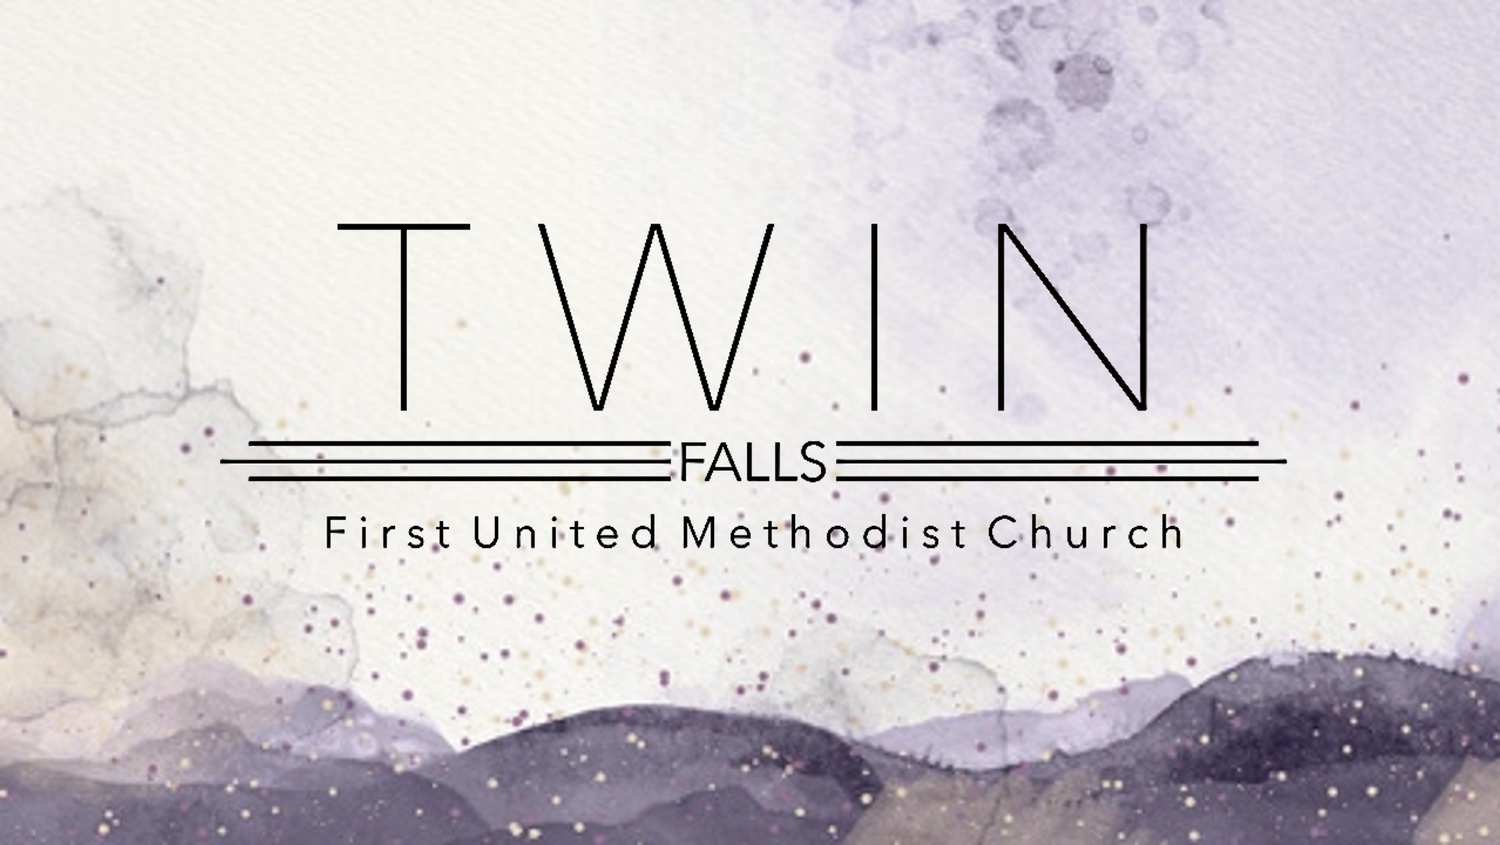  Twin Falls First United Methodist Church